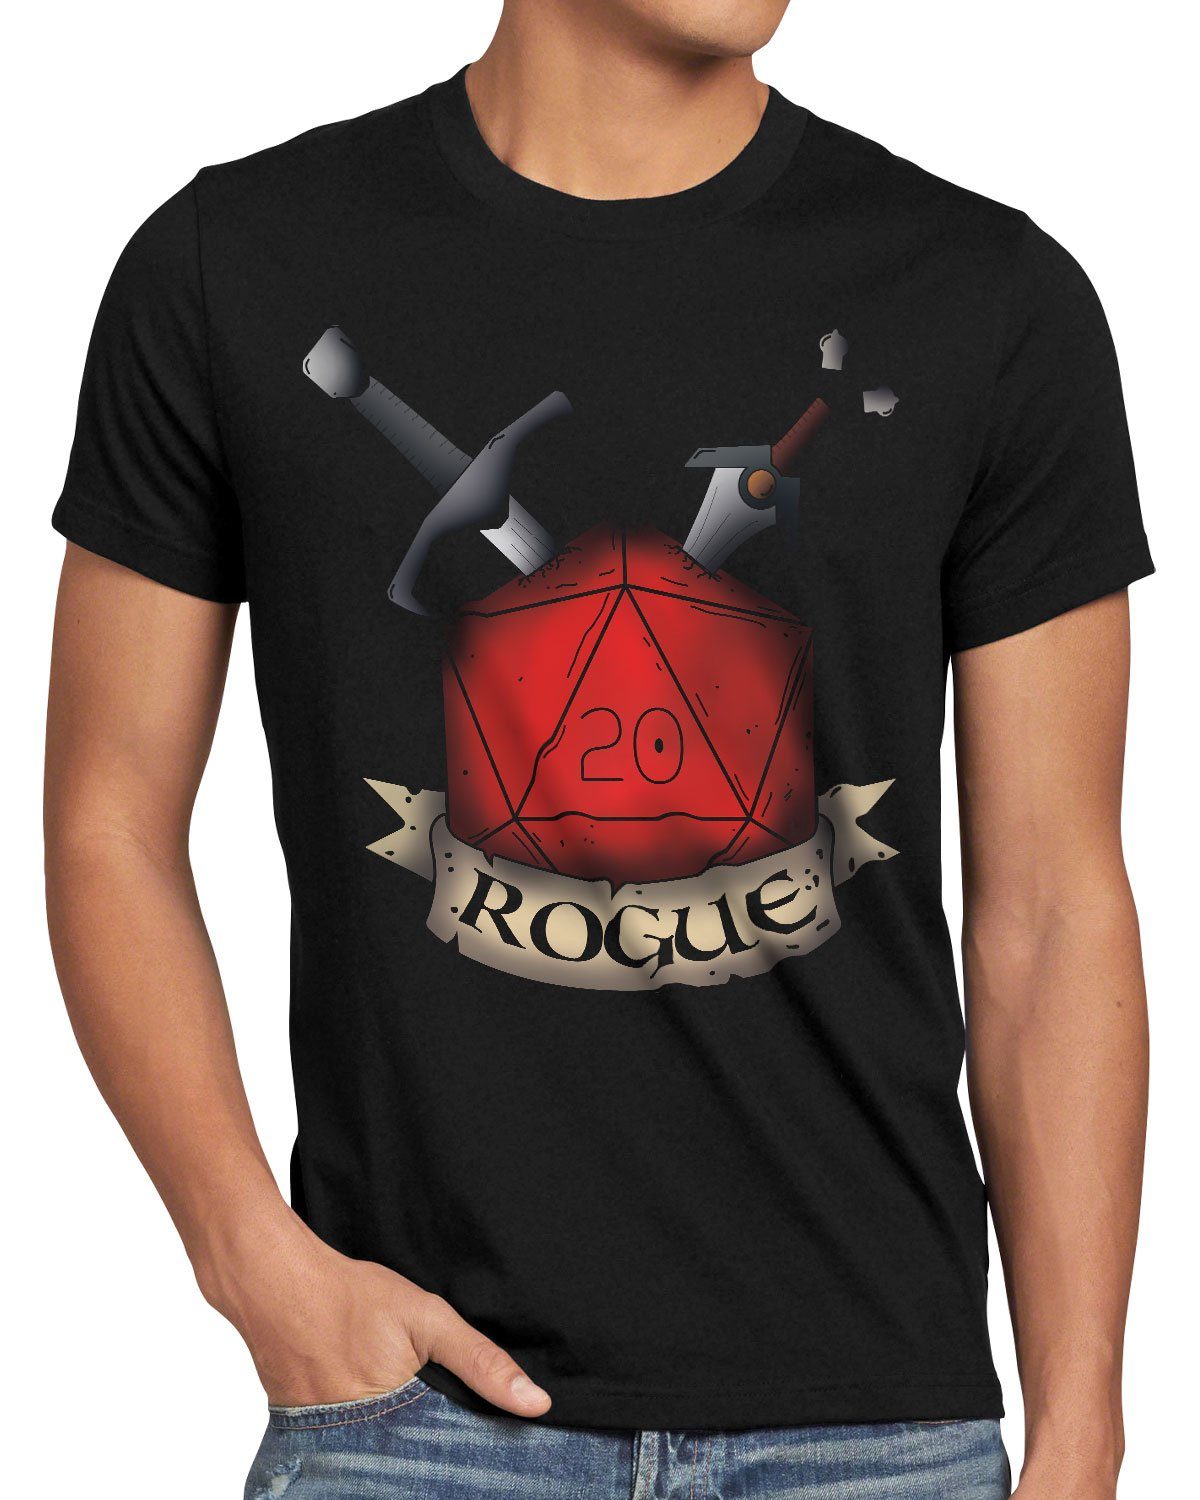 dragons Print-Shirt tabletop style3 Würfel T-Shirt dungeon Rogue Herren d20